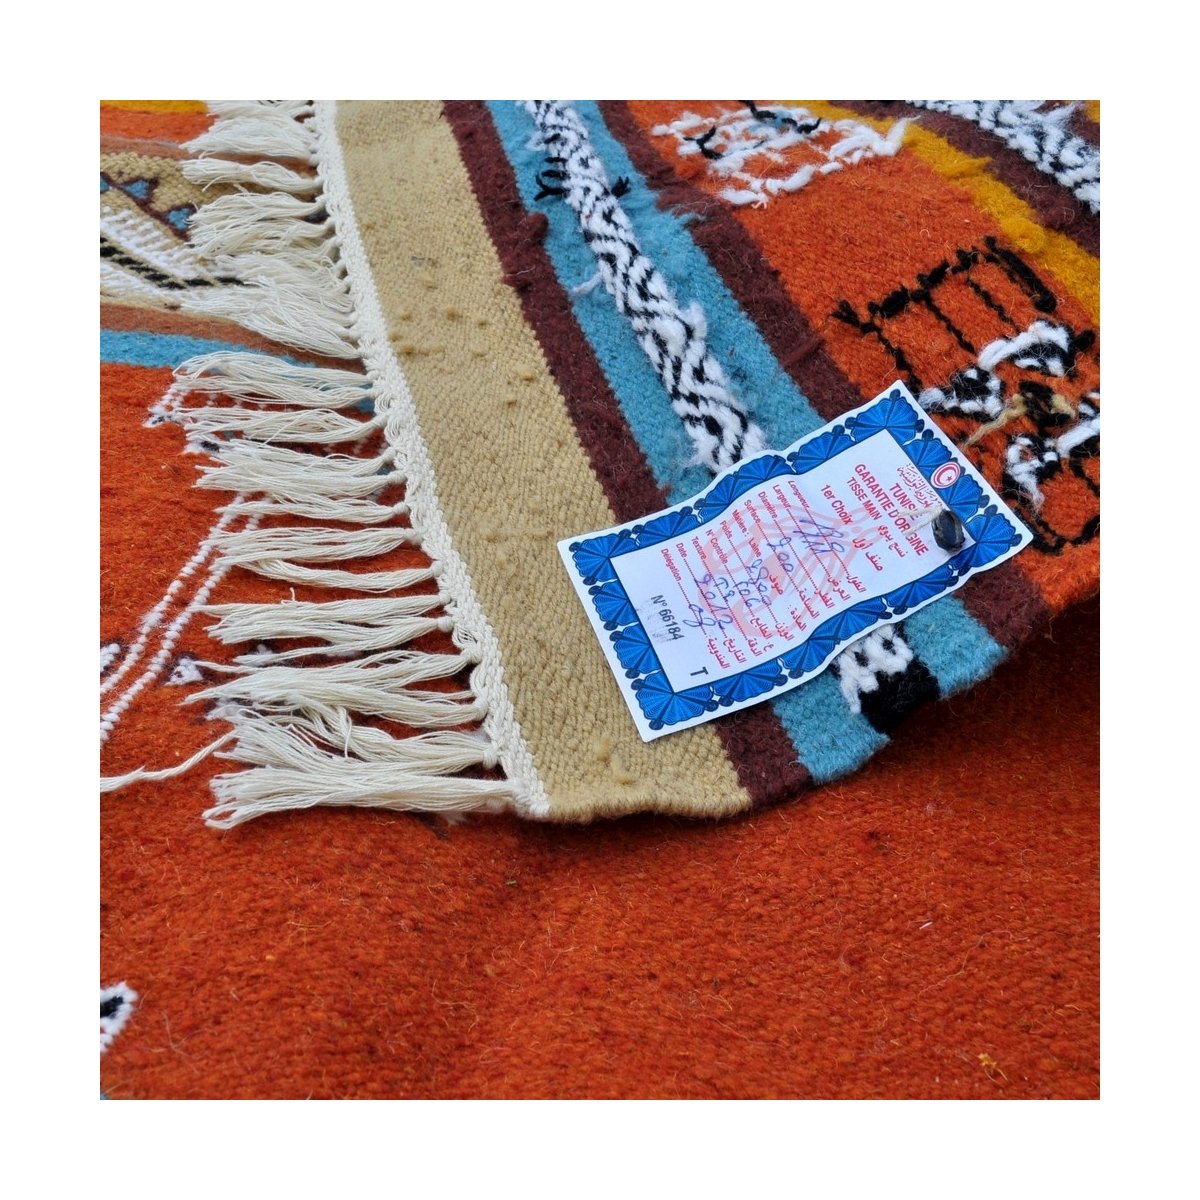 Berber tapijt Tapijt Kilim Othman 110x180 Jeel/Veelkleurig (Handgeweven, Wol, Tunesië) Tunesisch kilimdeken, Marokkaanse stijl. 